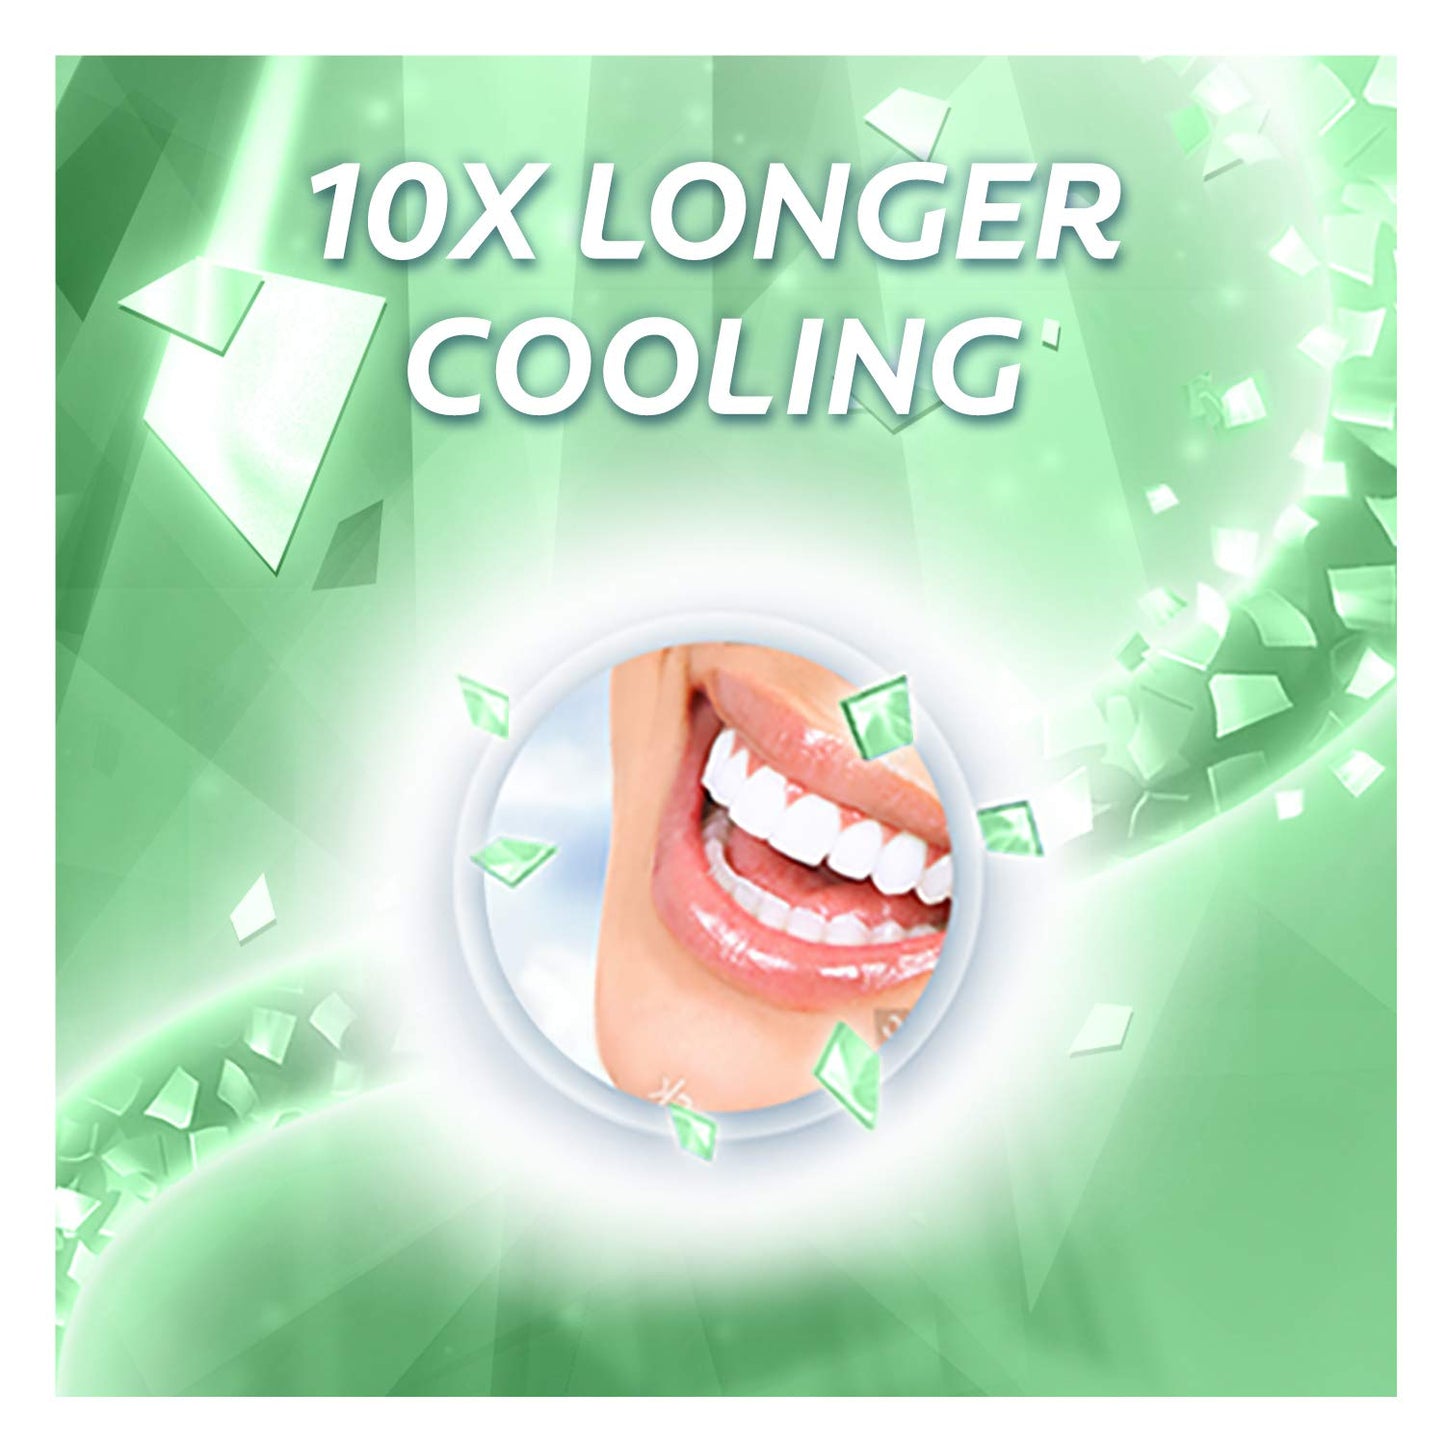 Colgate Max Fresh Clean Mint Gel Toothpaste - 4 X 75 ml